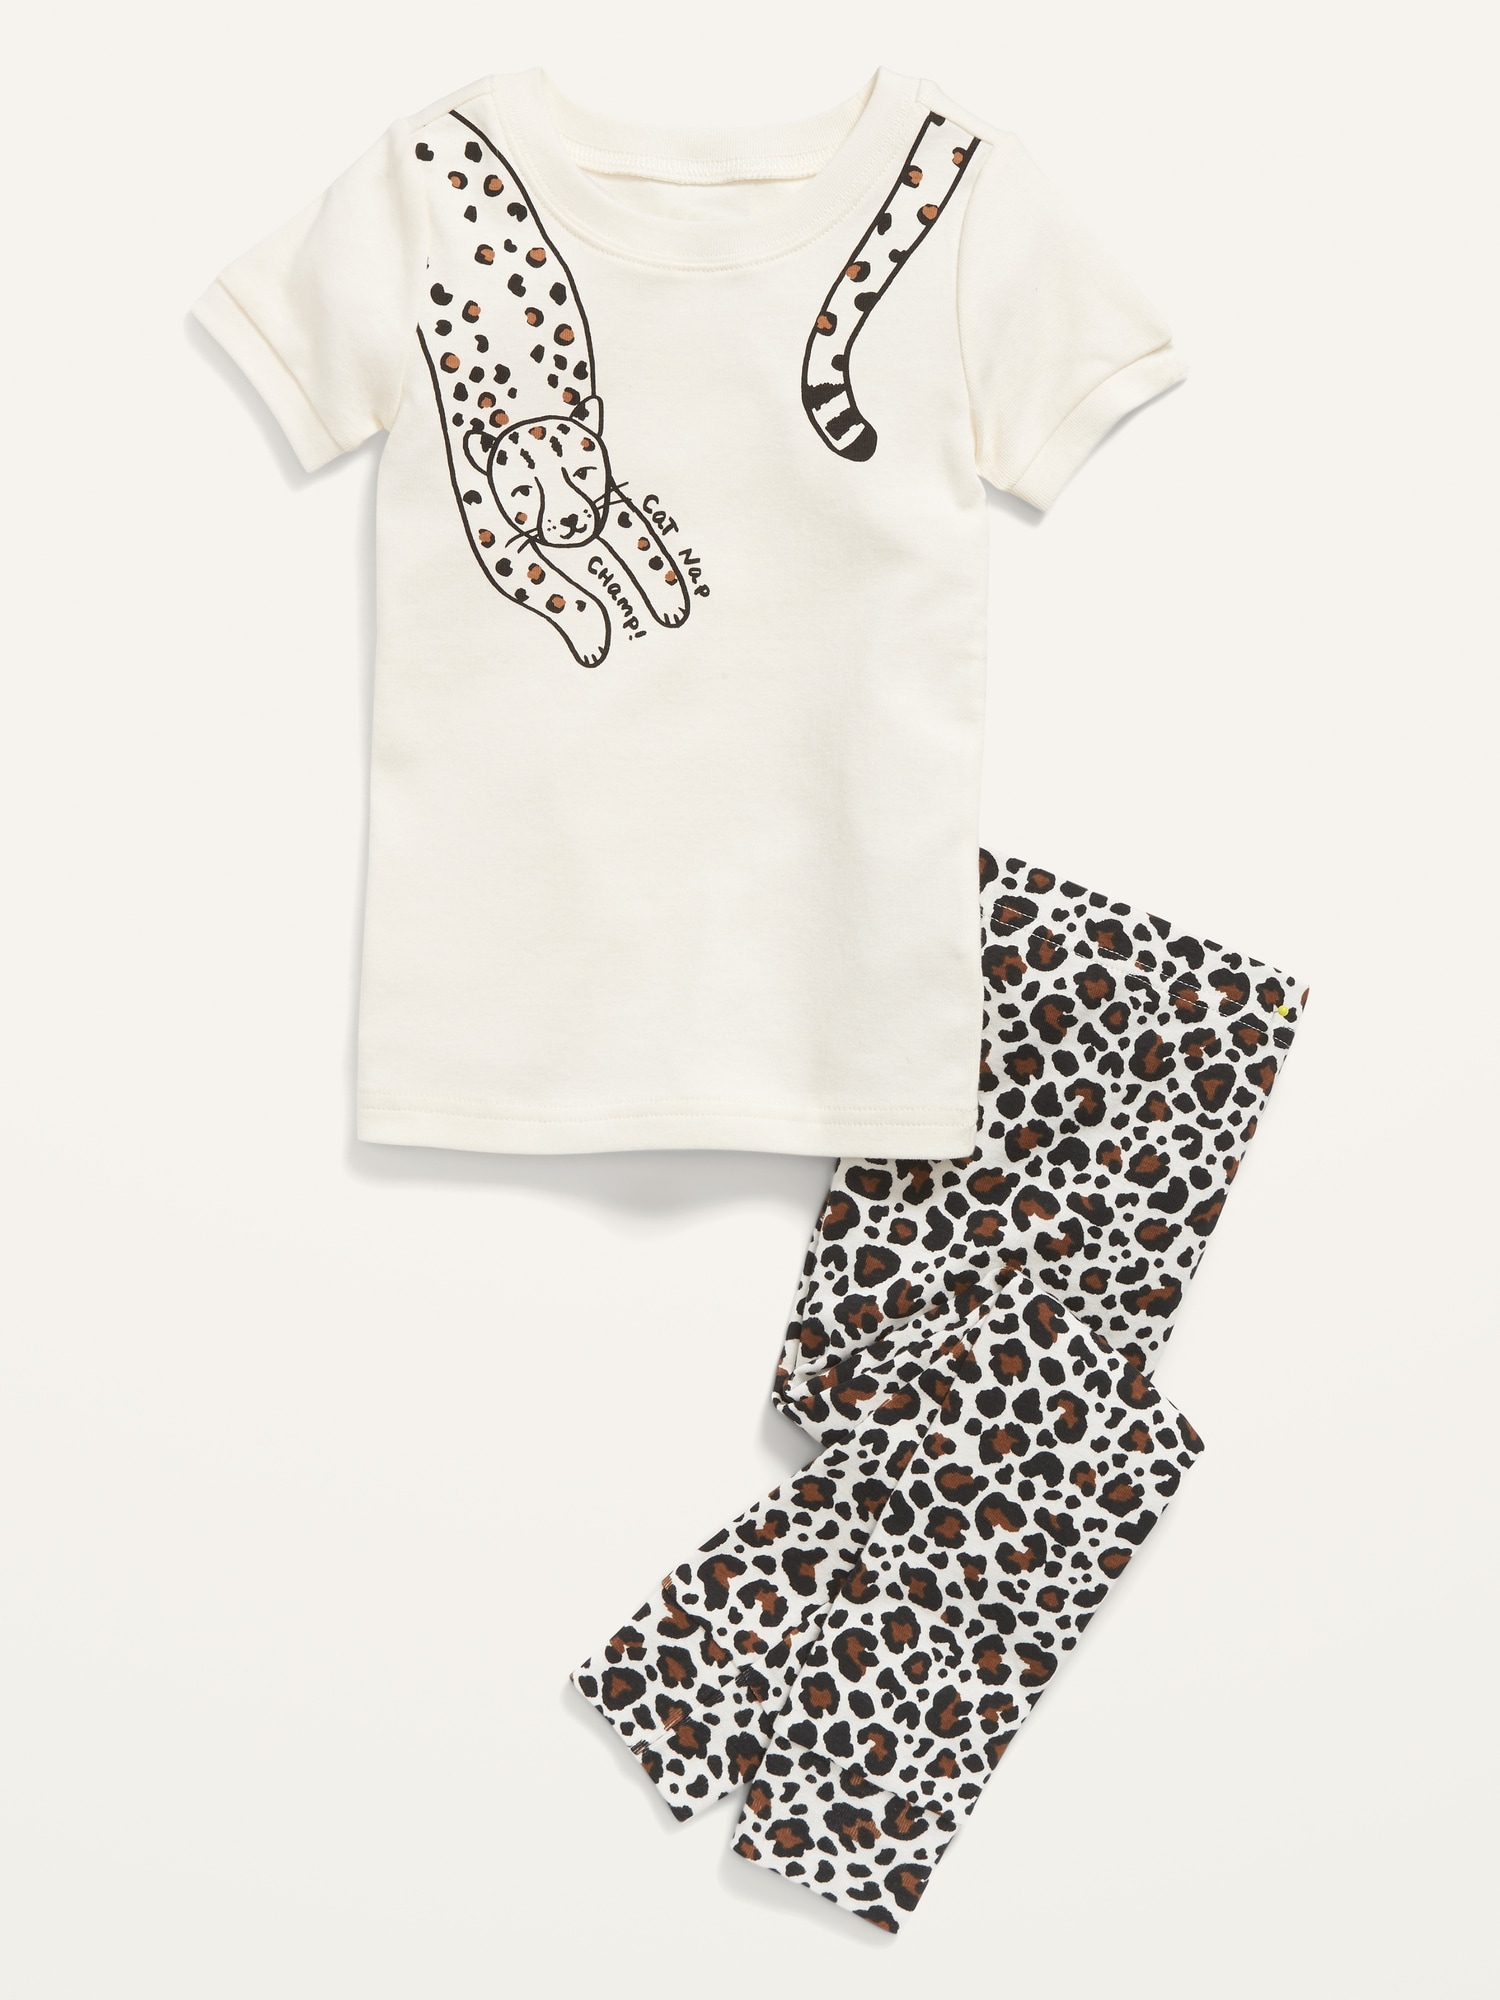 Unisex 4-Piece Printed Snug-Fit Pajama Set for Toddler & Baby